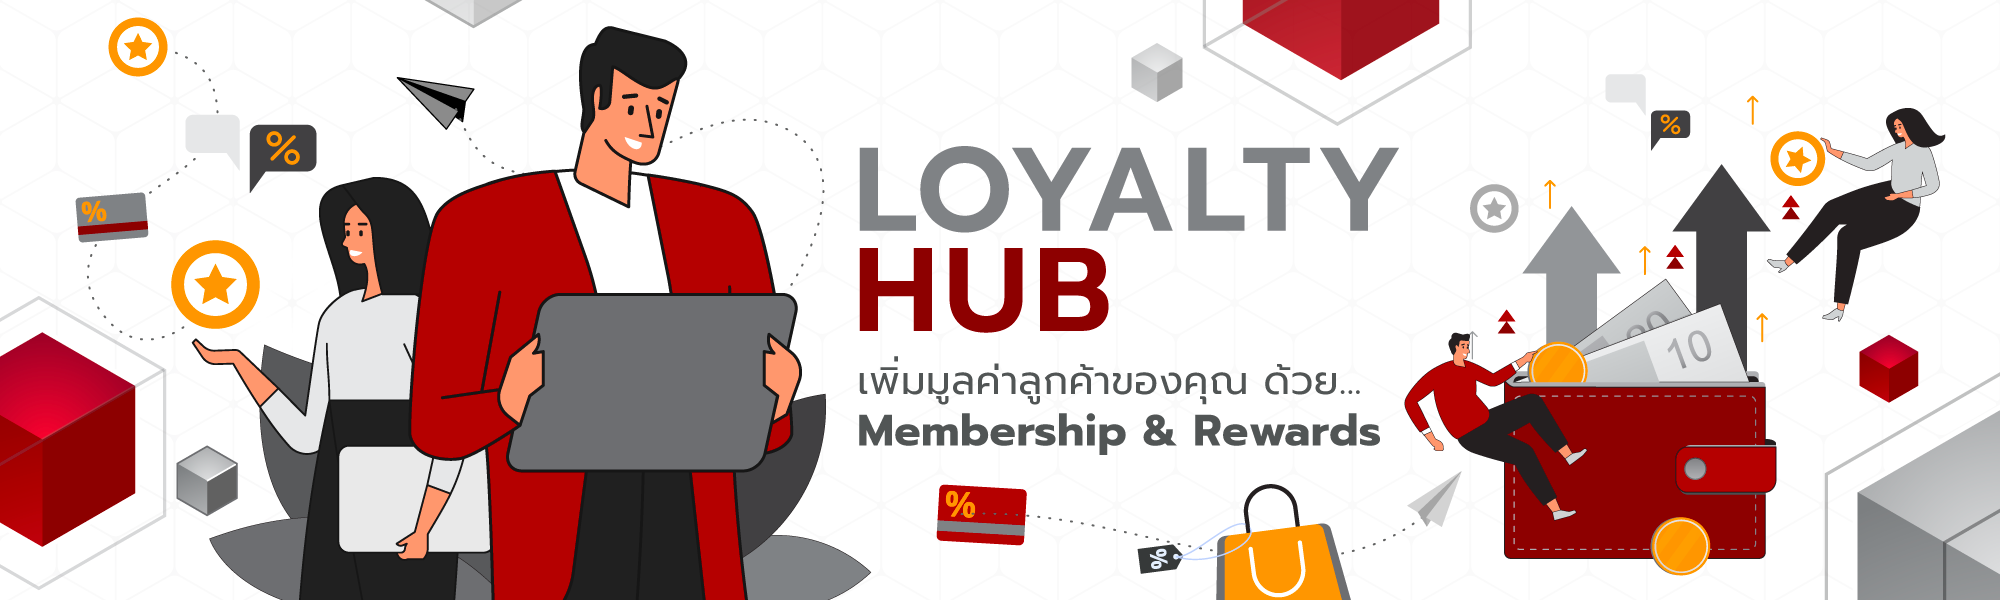 3-Web-Banner-Loyalty-Hub-2021